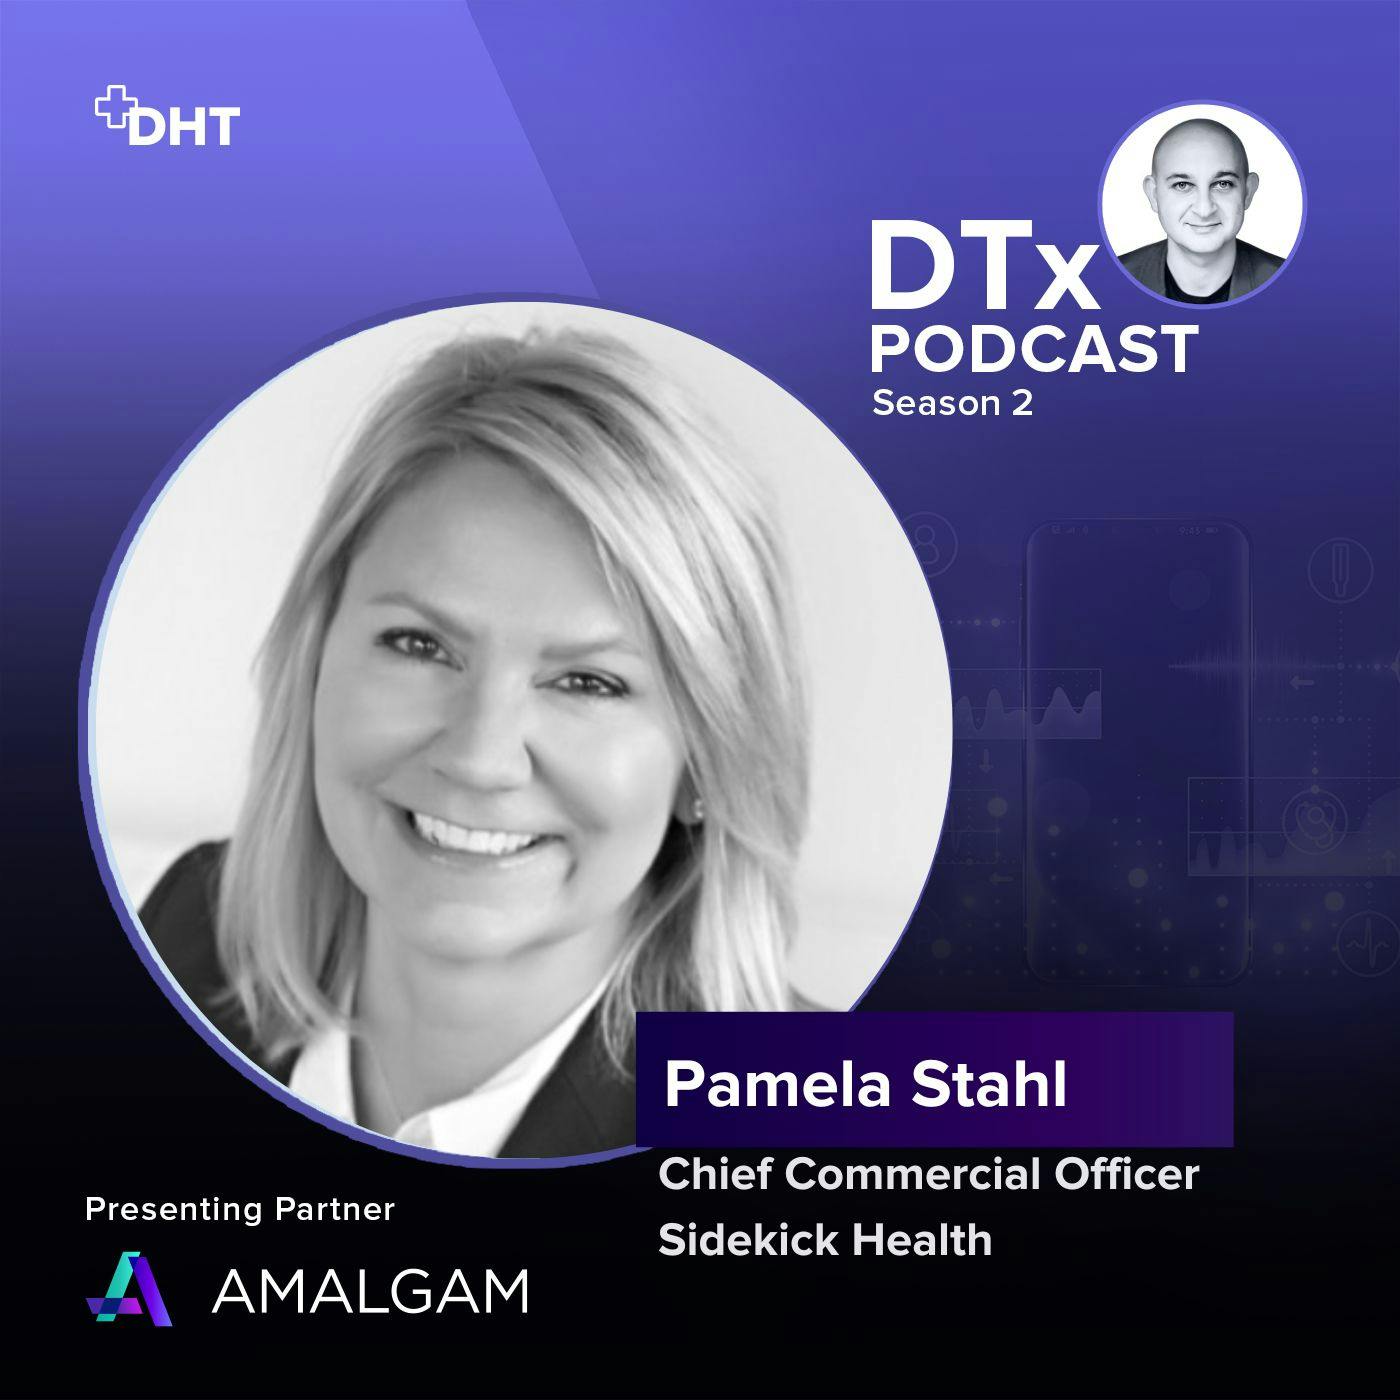 Ep36: Gamifying Healthcare to Enable Behavior Change: Pamela Stahl Shares Insights into Sidekick Heath’s Digital Therapeutics